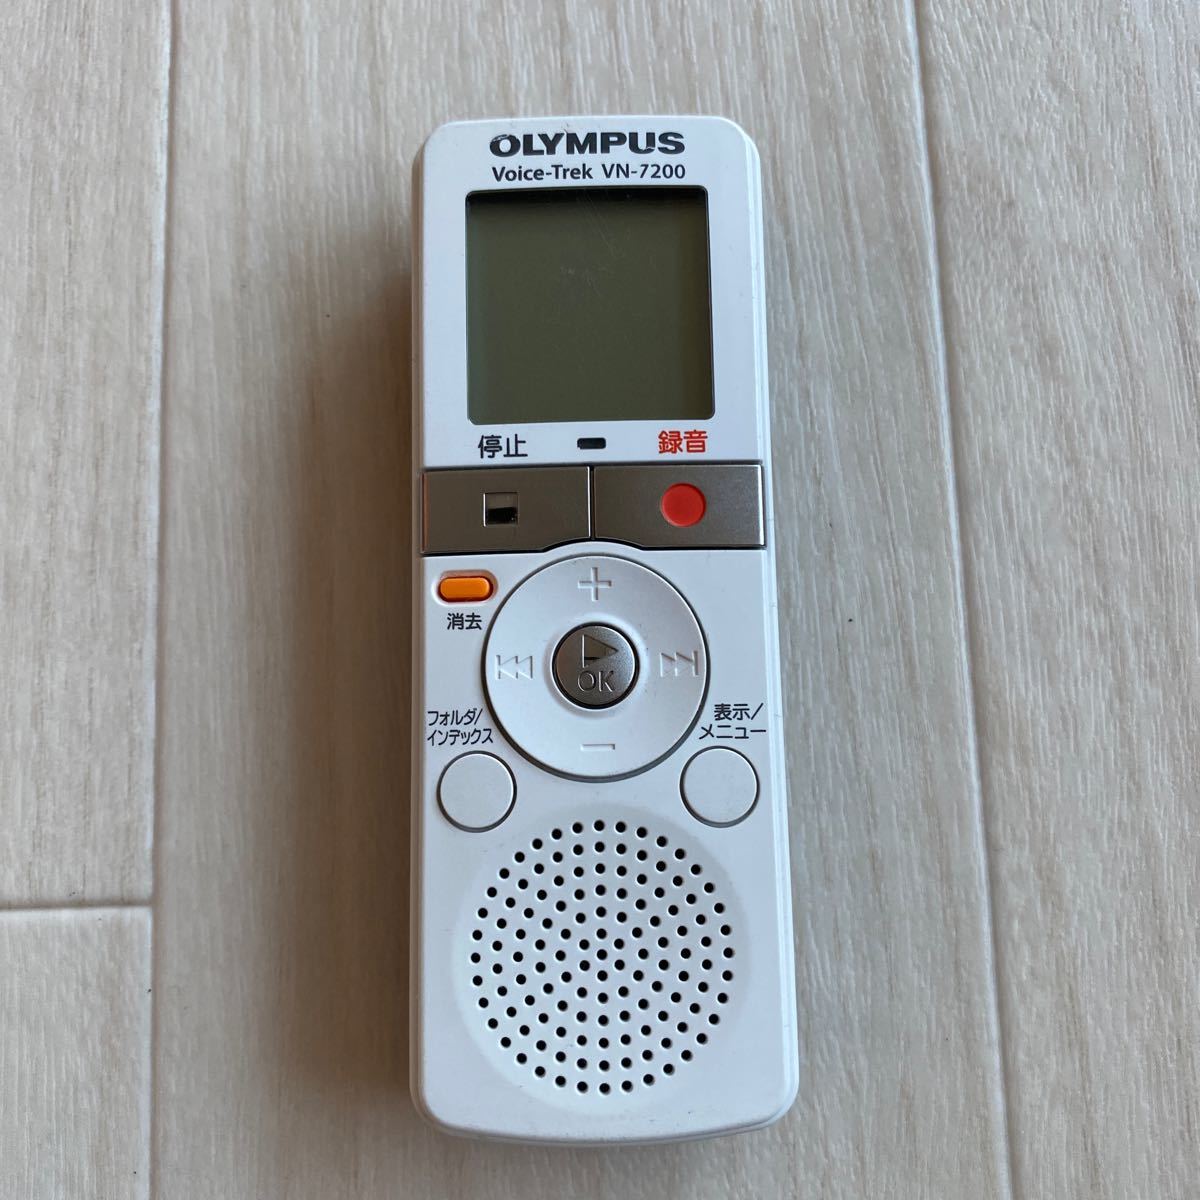 Olympus Voice-Trek VN-7200 Olympus Voistrek IC Recorder Voice Recorder Бесплатная доставка S776